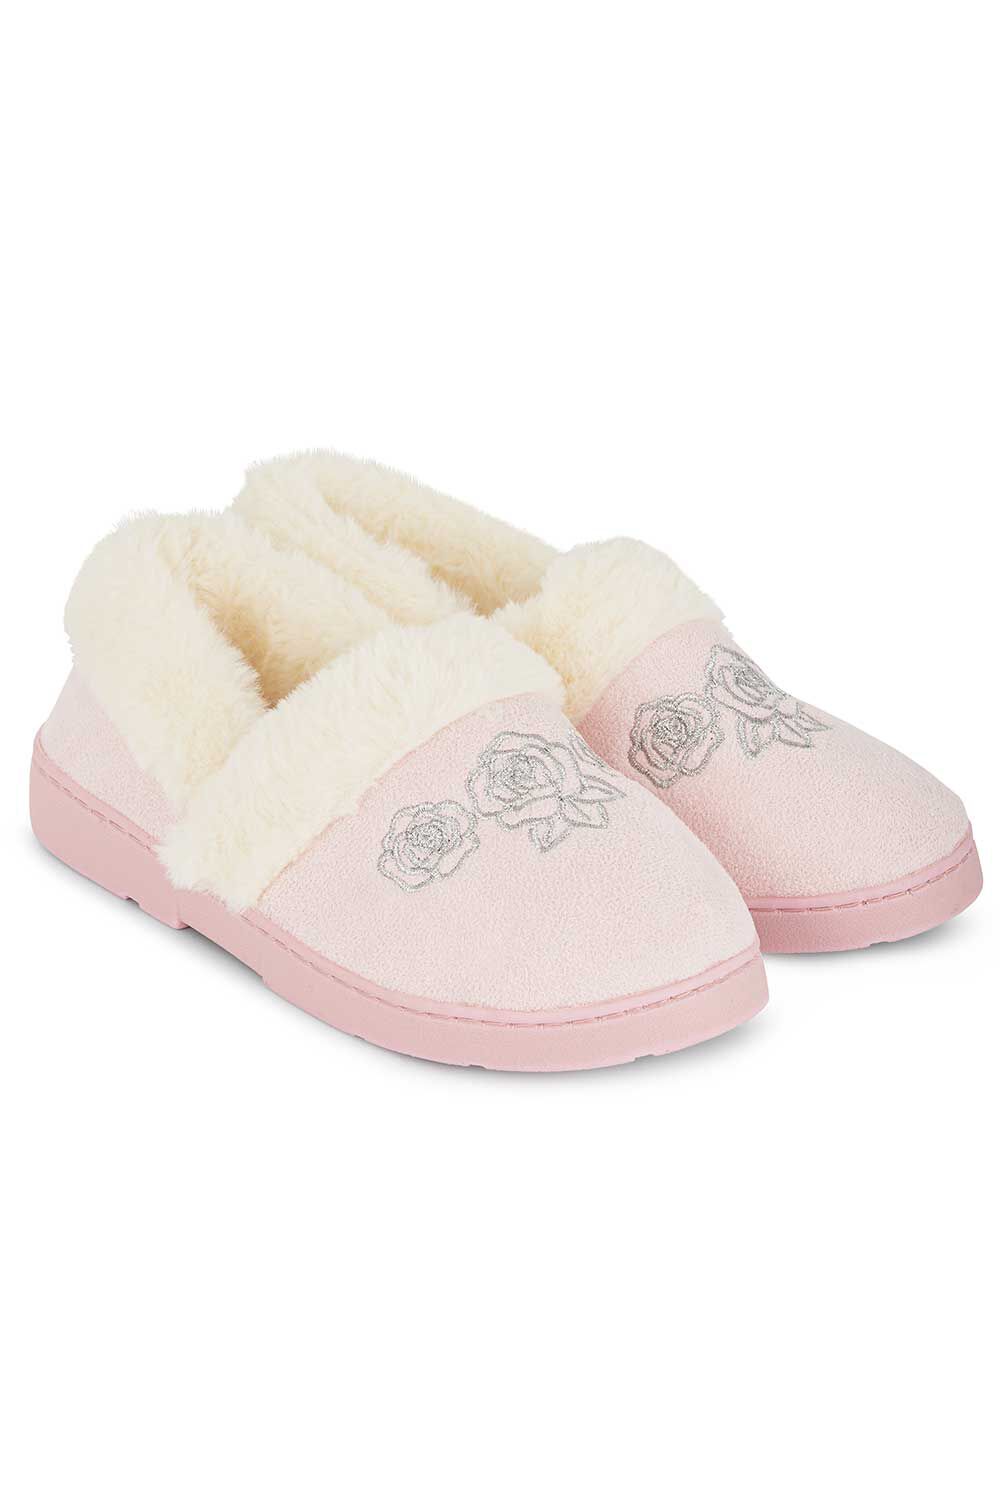 bon marche slippers 96770c